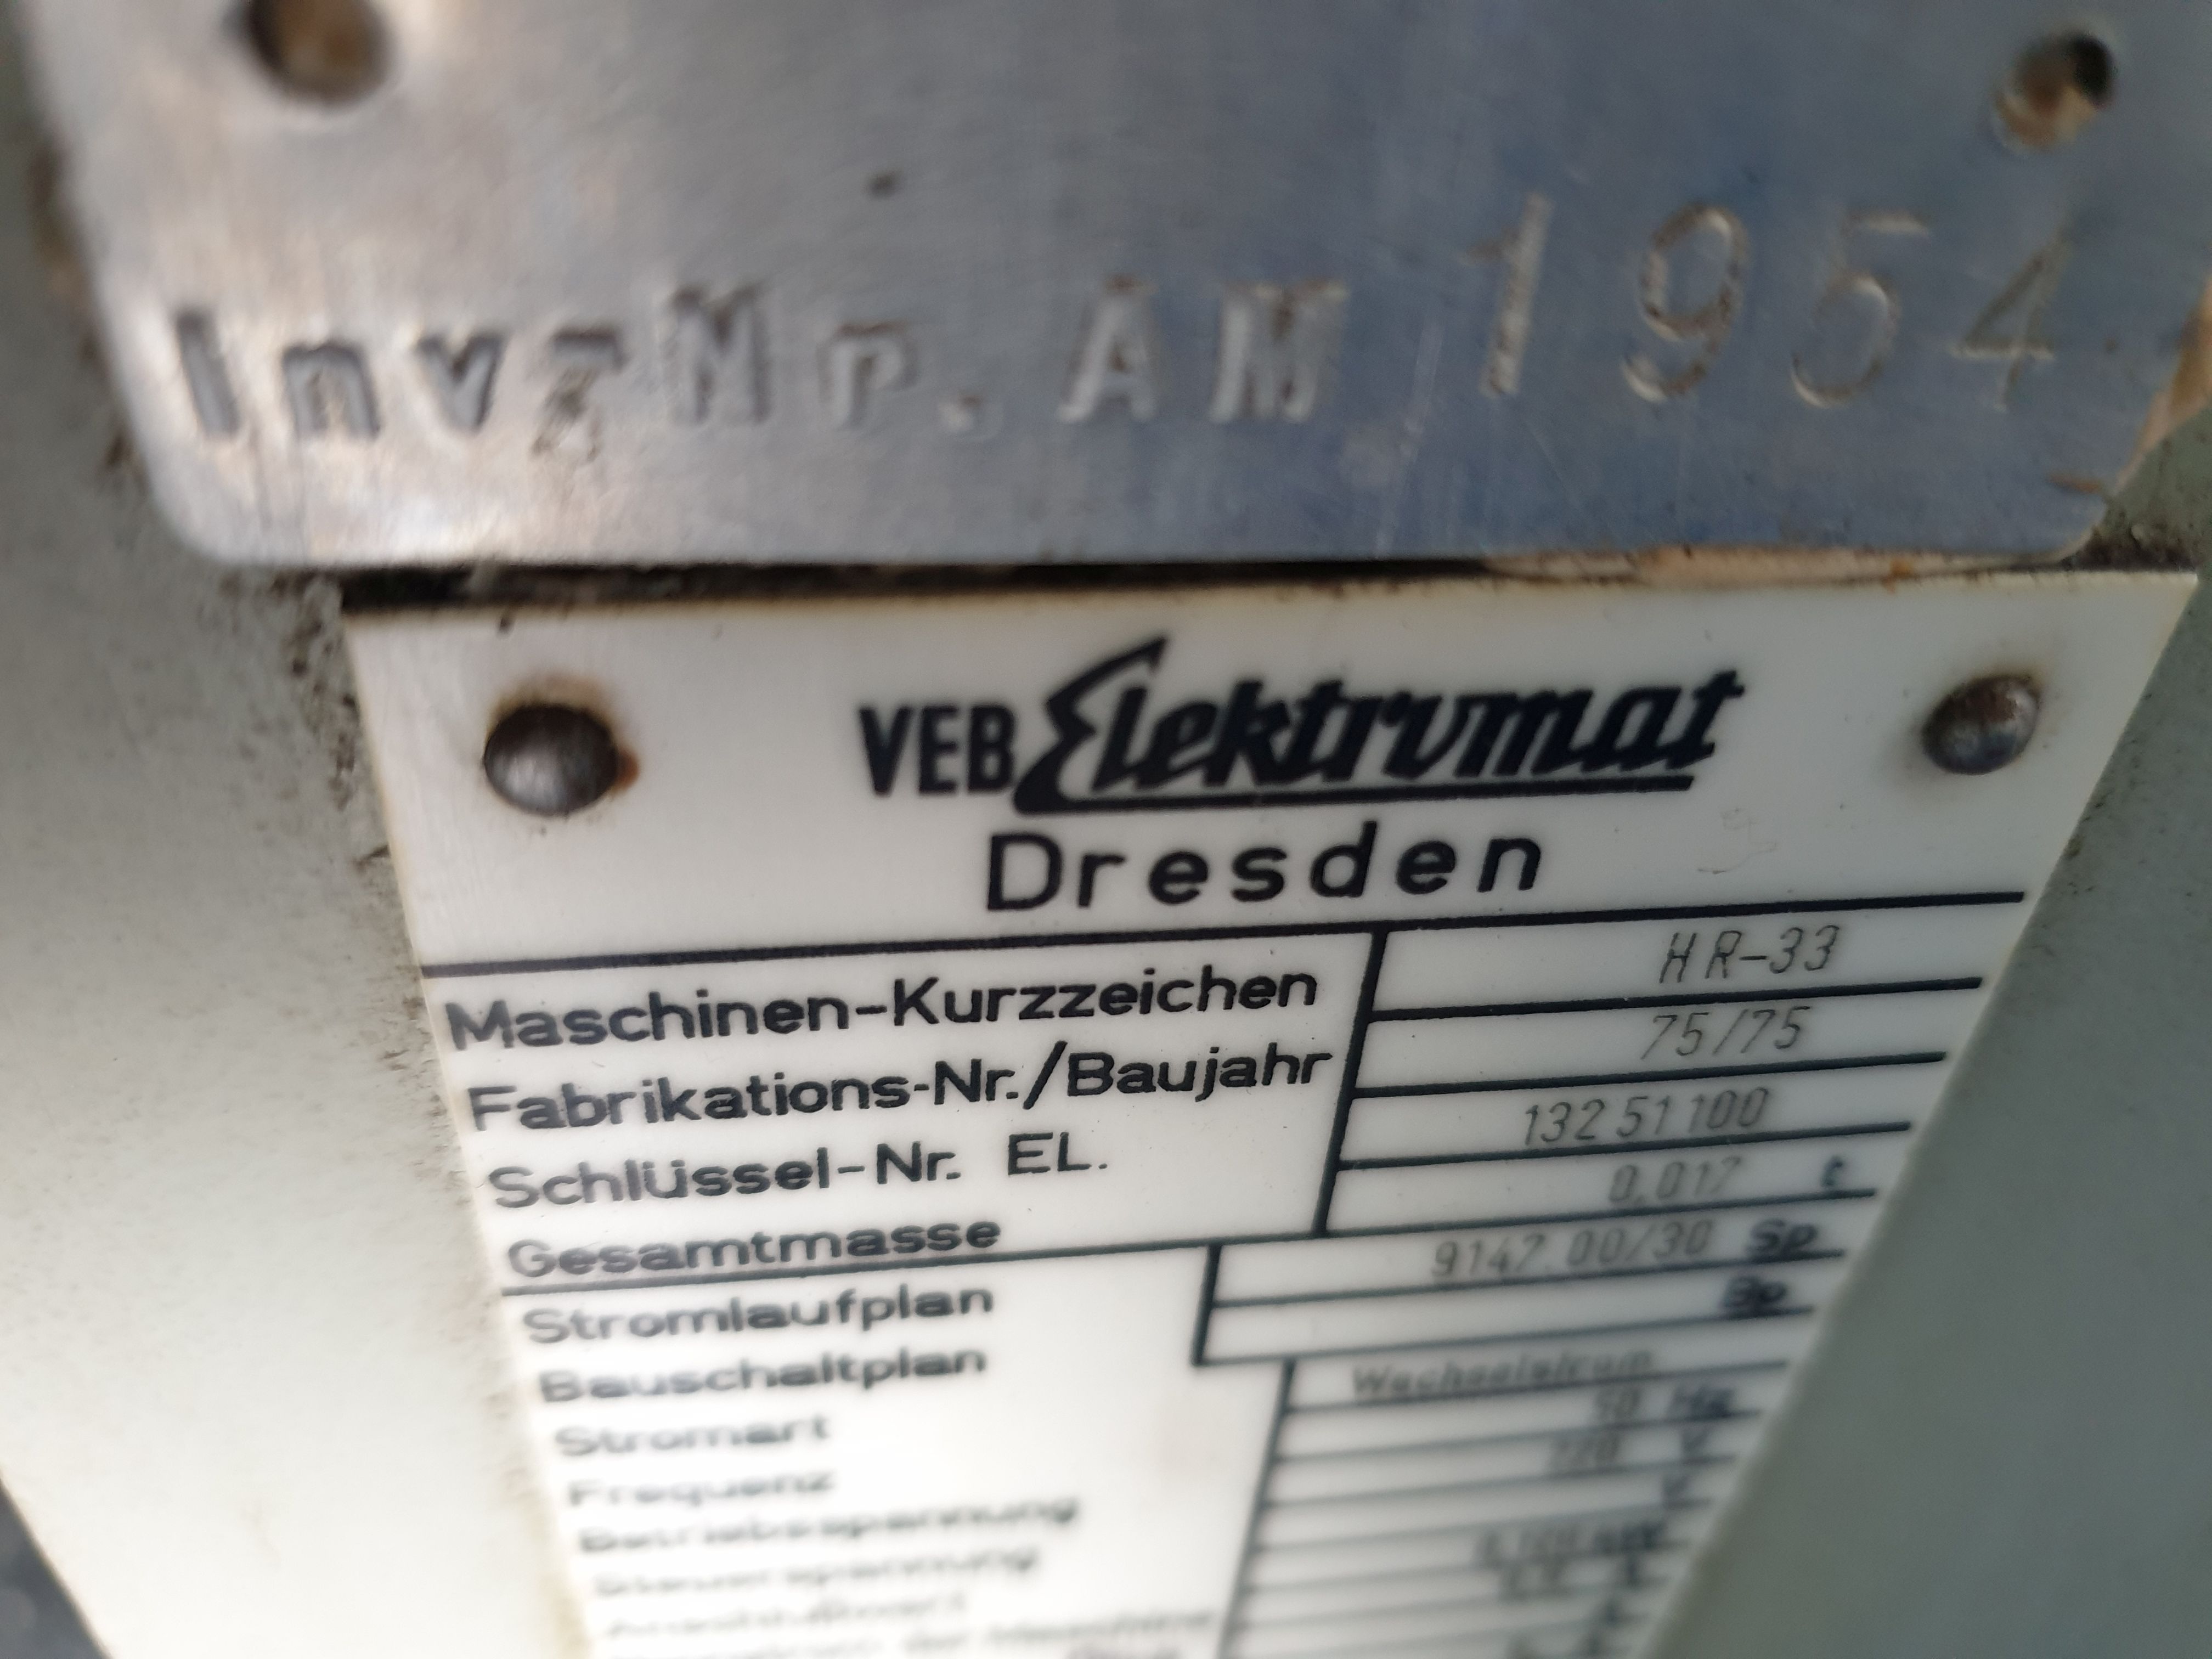 VEB Elektromat Dresden: HR 33